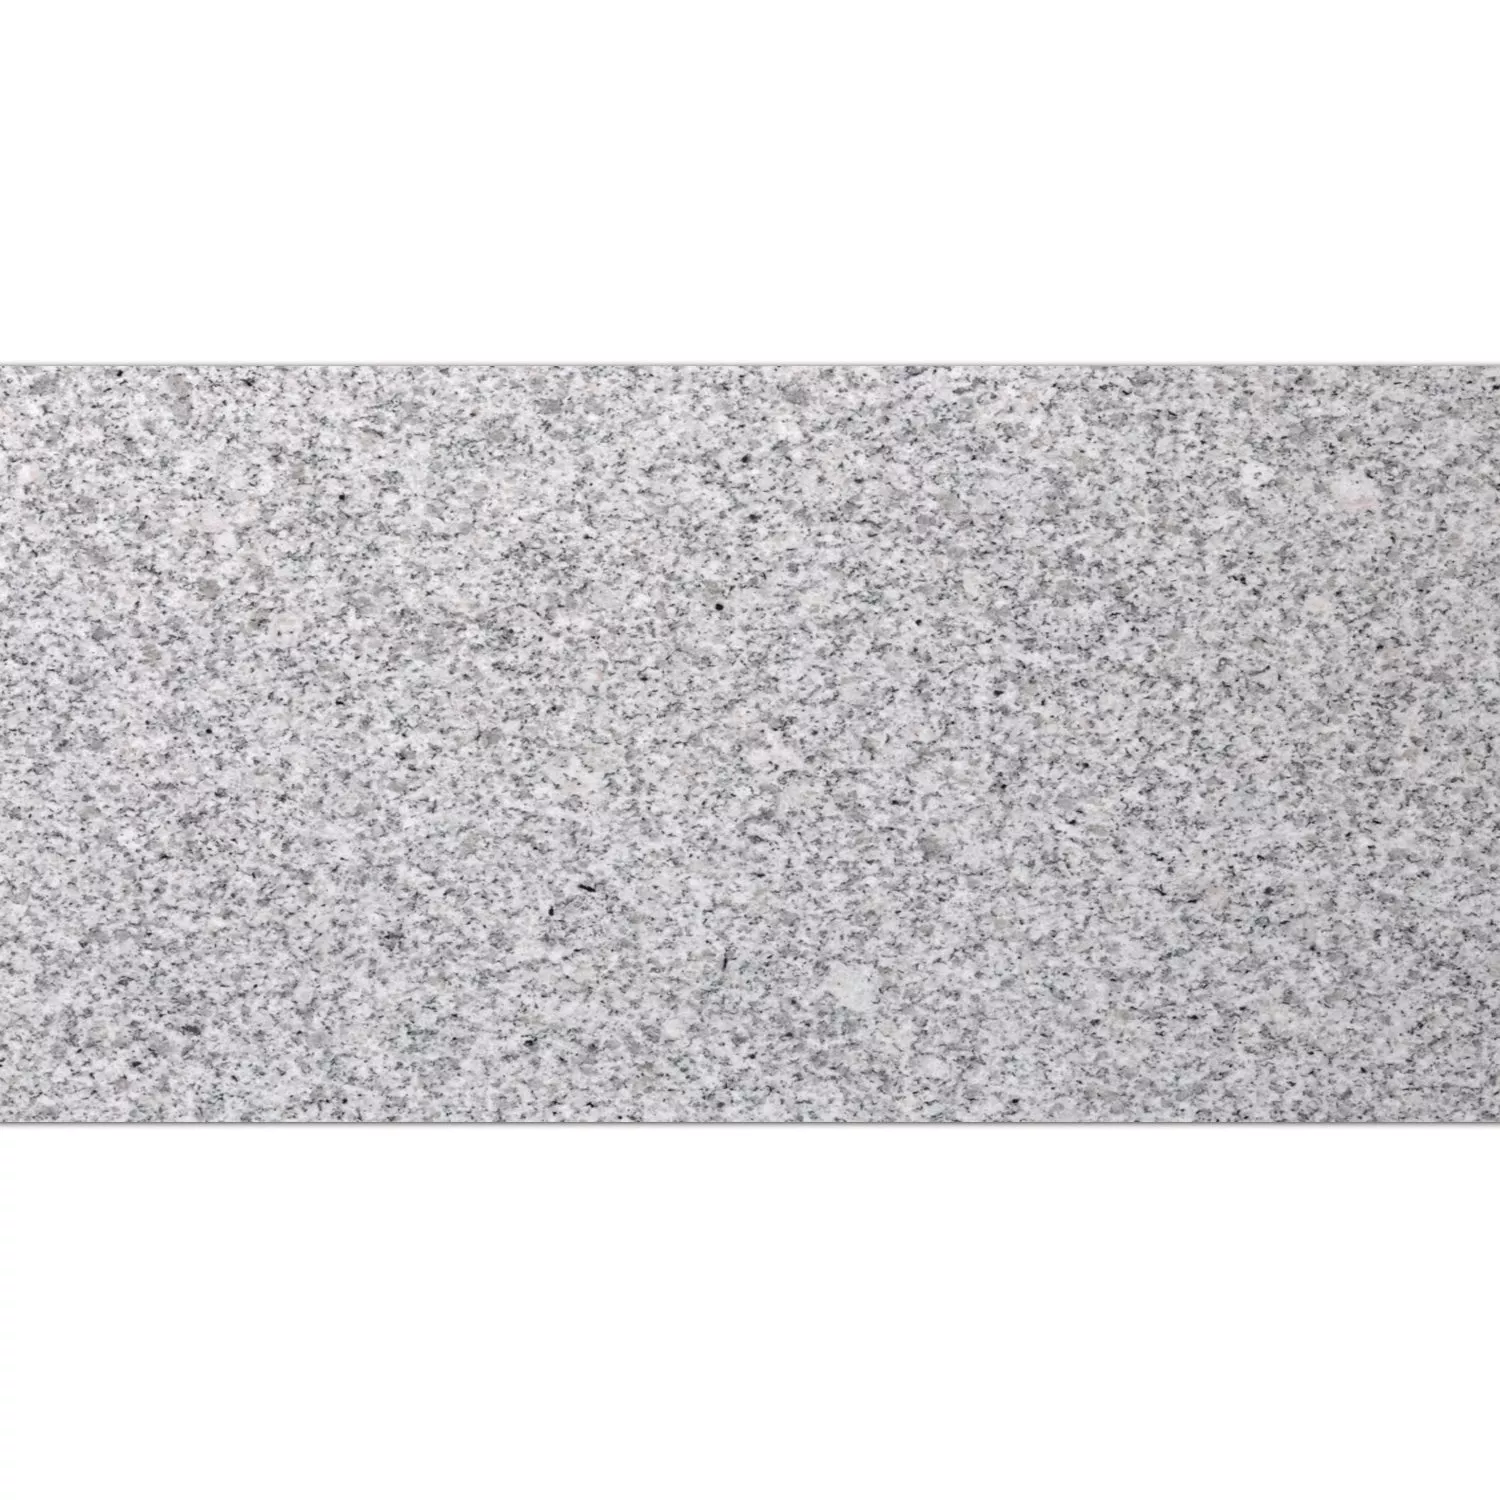 Ladrilhos De Pedra Natural Granito China Grey Inflamado 30,5x61cm